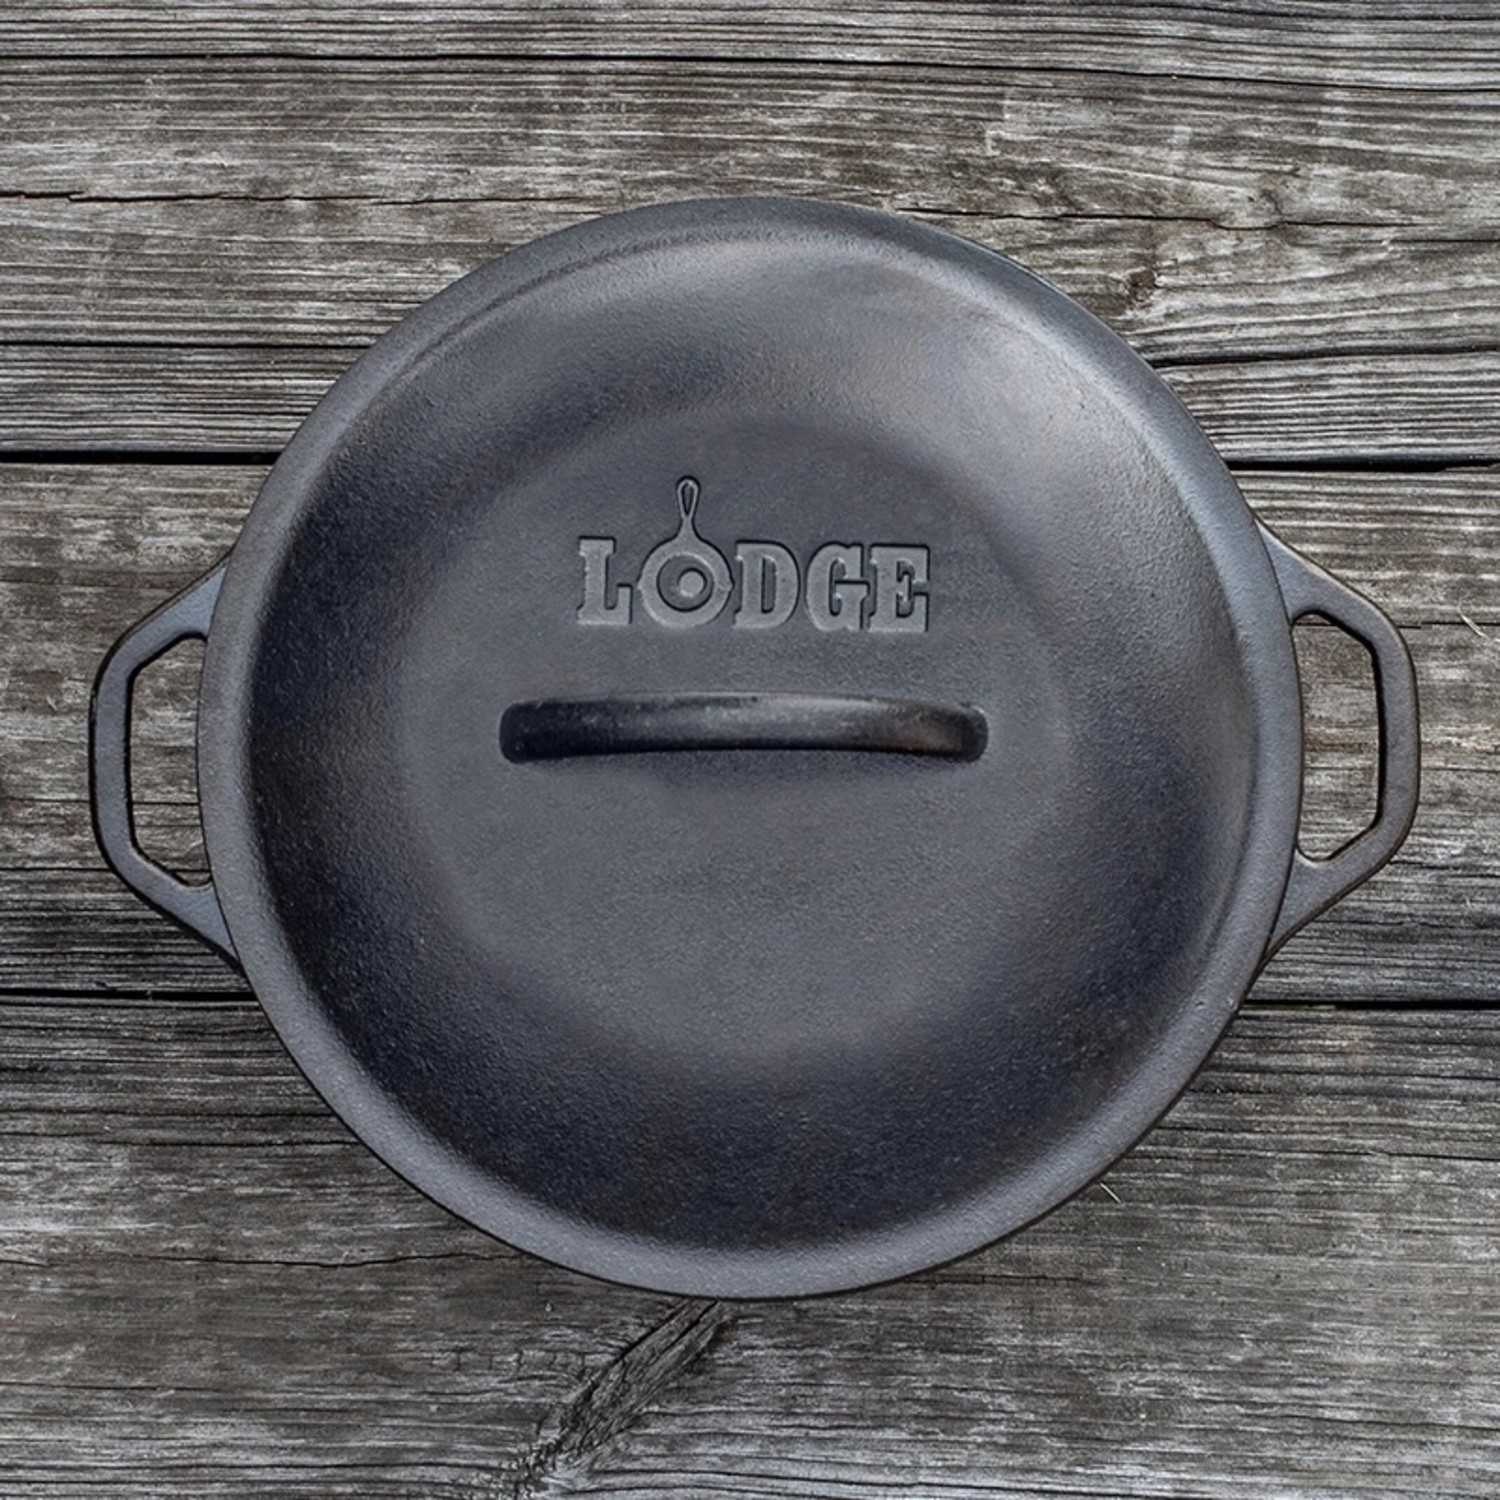 Lodge Cast Iron, Dutch Oven, 5 Quart